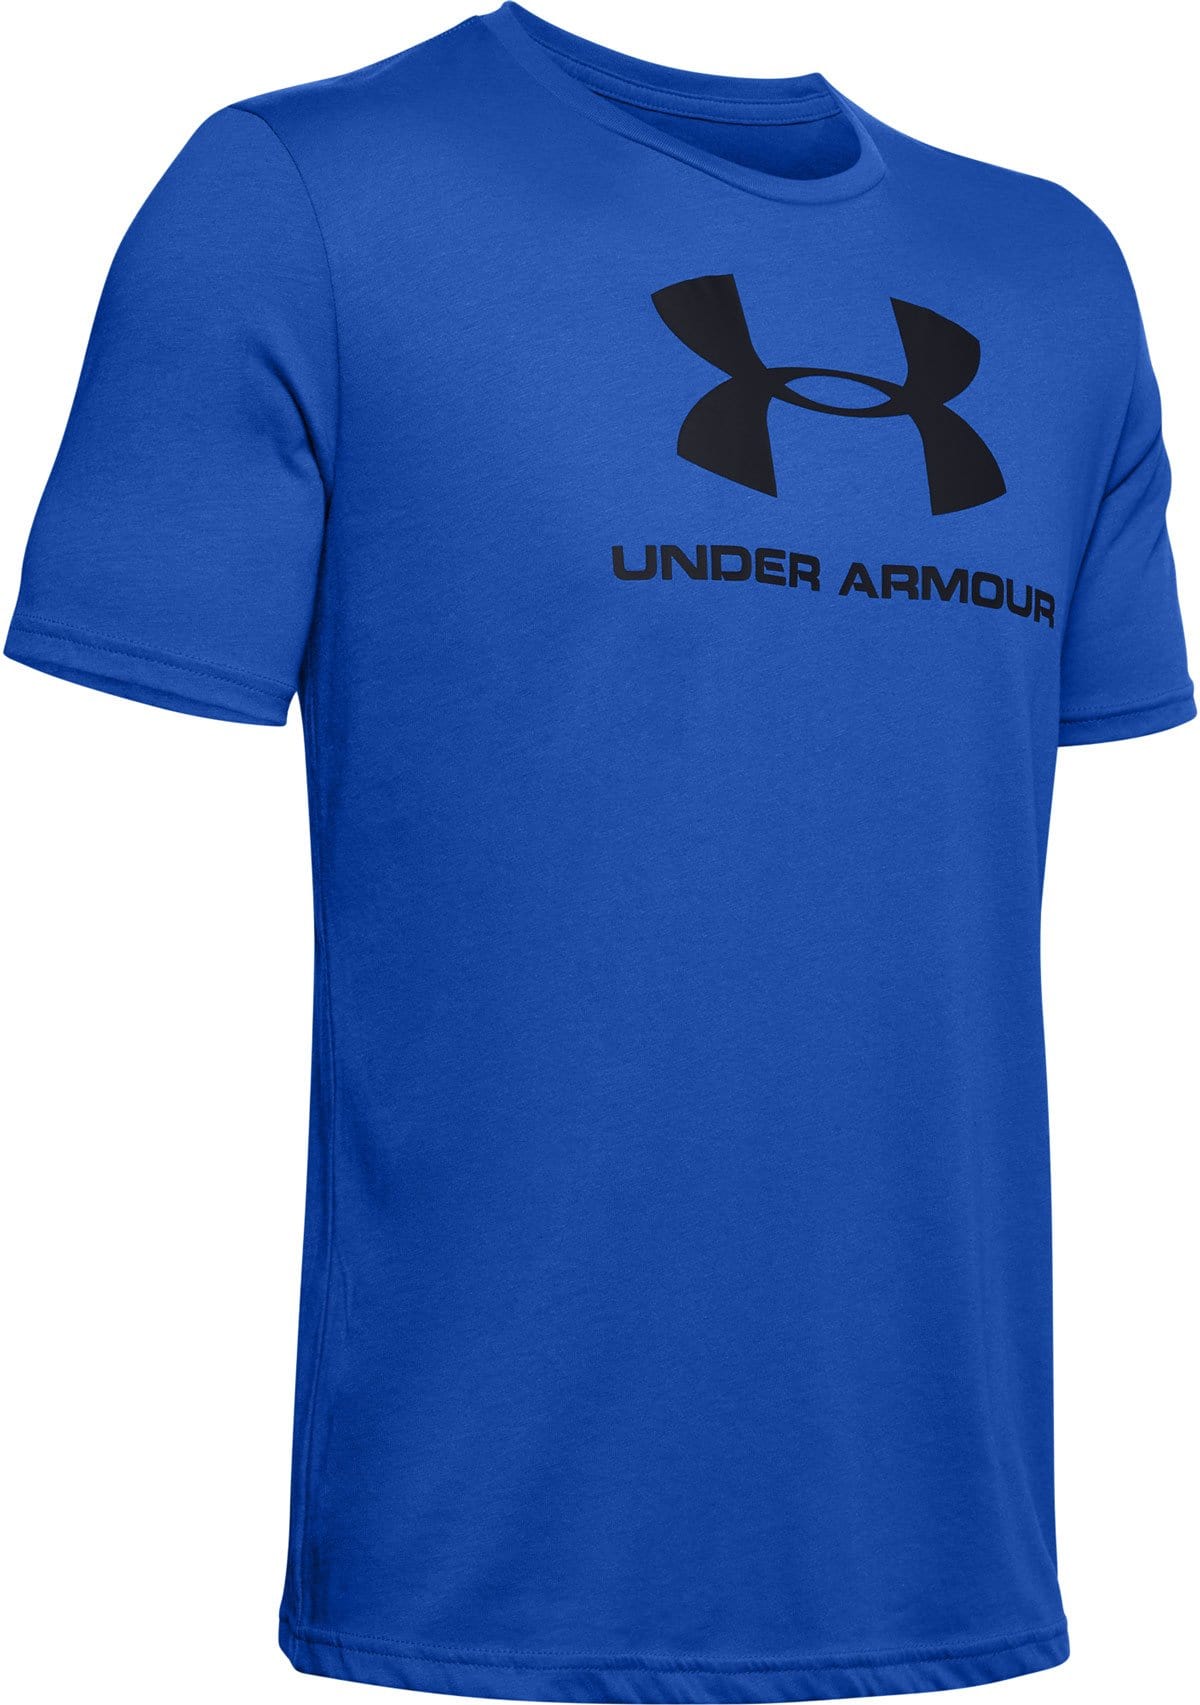 blue under armour t shirt